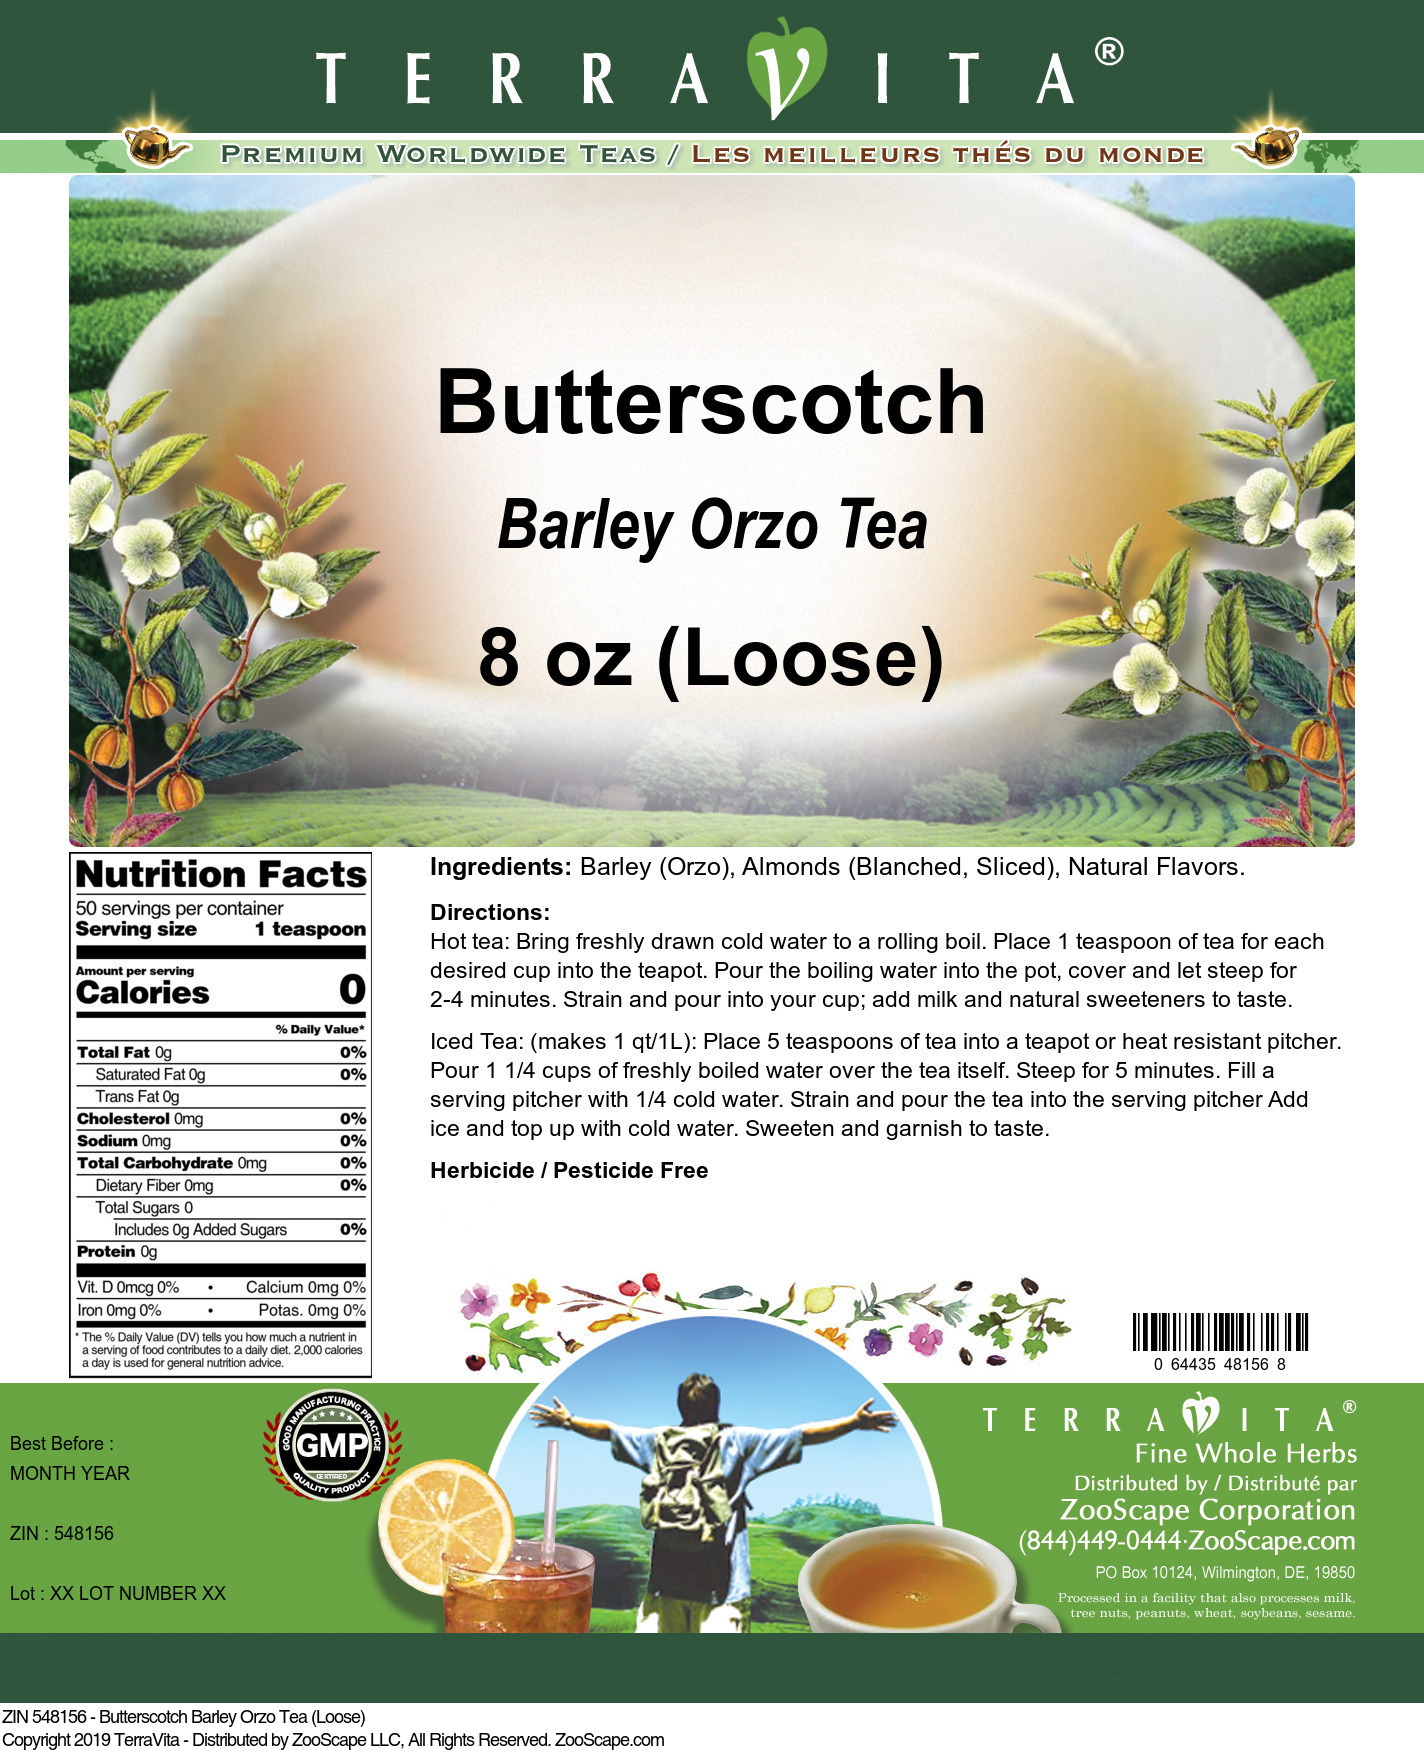 Butterscotch Barley Orzo Tea (Loose) - Label